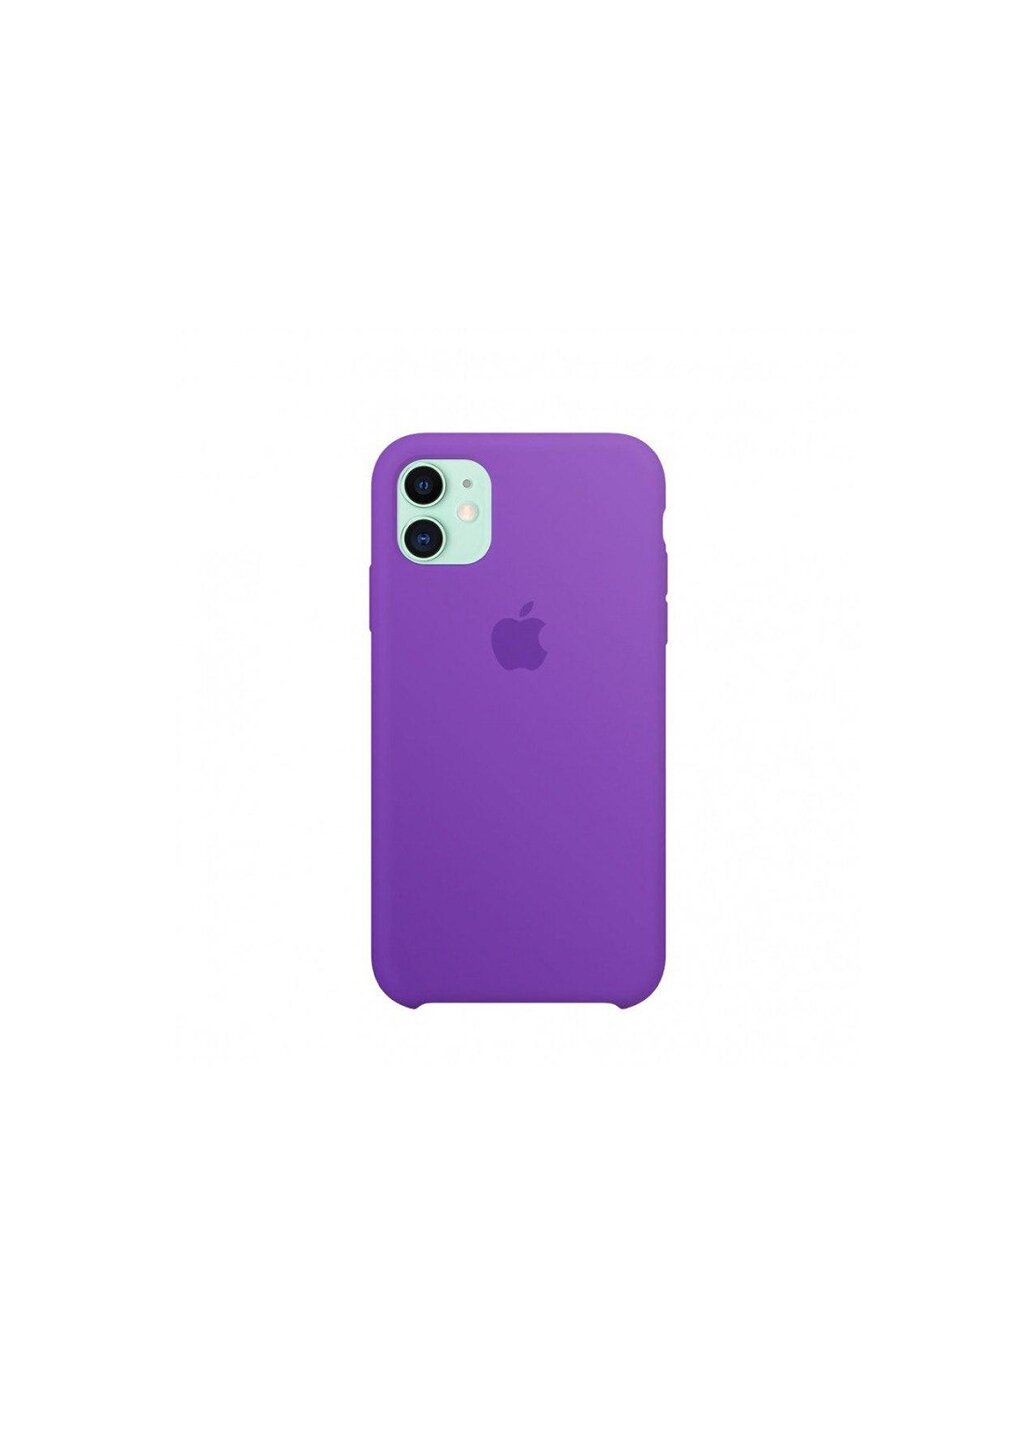 Iphone чехлы фиолетовые. Чехол iphone 11 Silicone Case Lilac. Iphone 11 фиолетовый. Айфон 11 сиреневый. Mwyv2fe/a чехол.